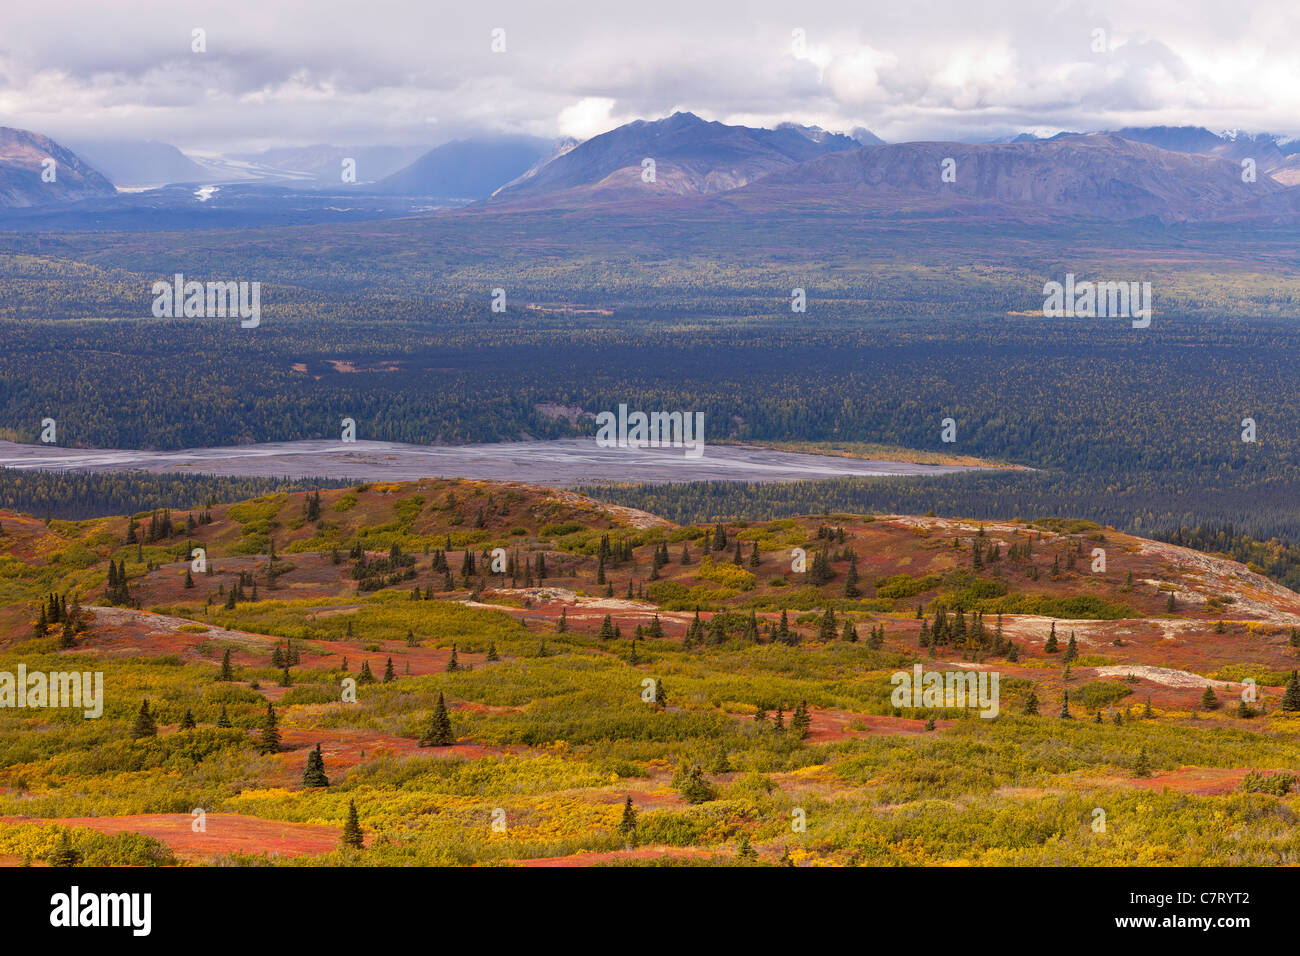 DENALI STATE PARK, ALASKA, USA - Kesugi Ridge autumn tundra. Chulitna River valley in distance. Stock Photo